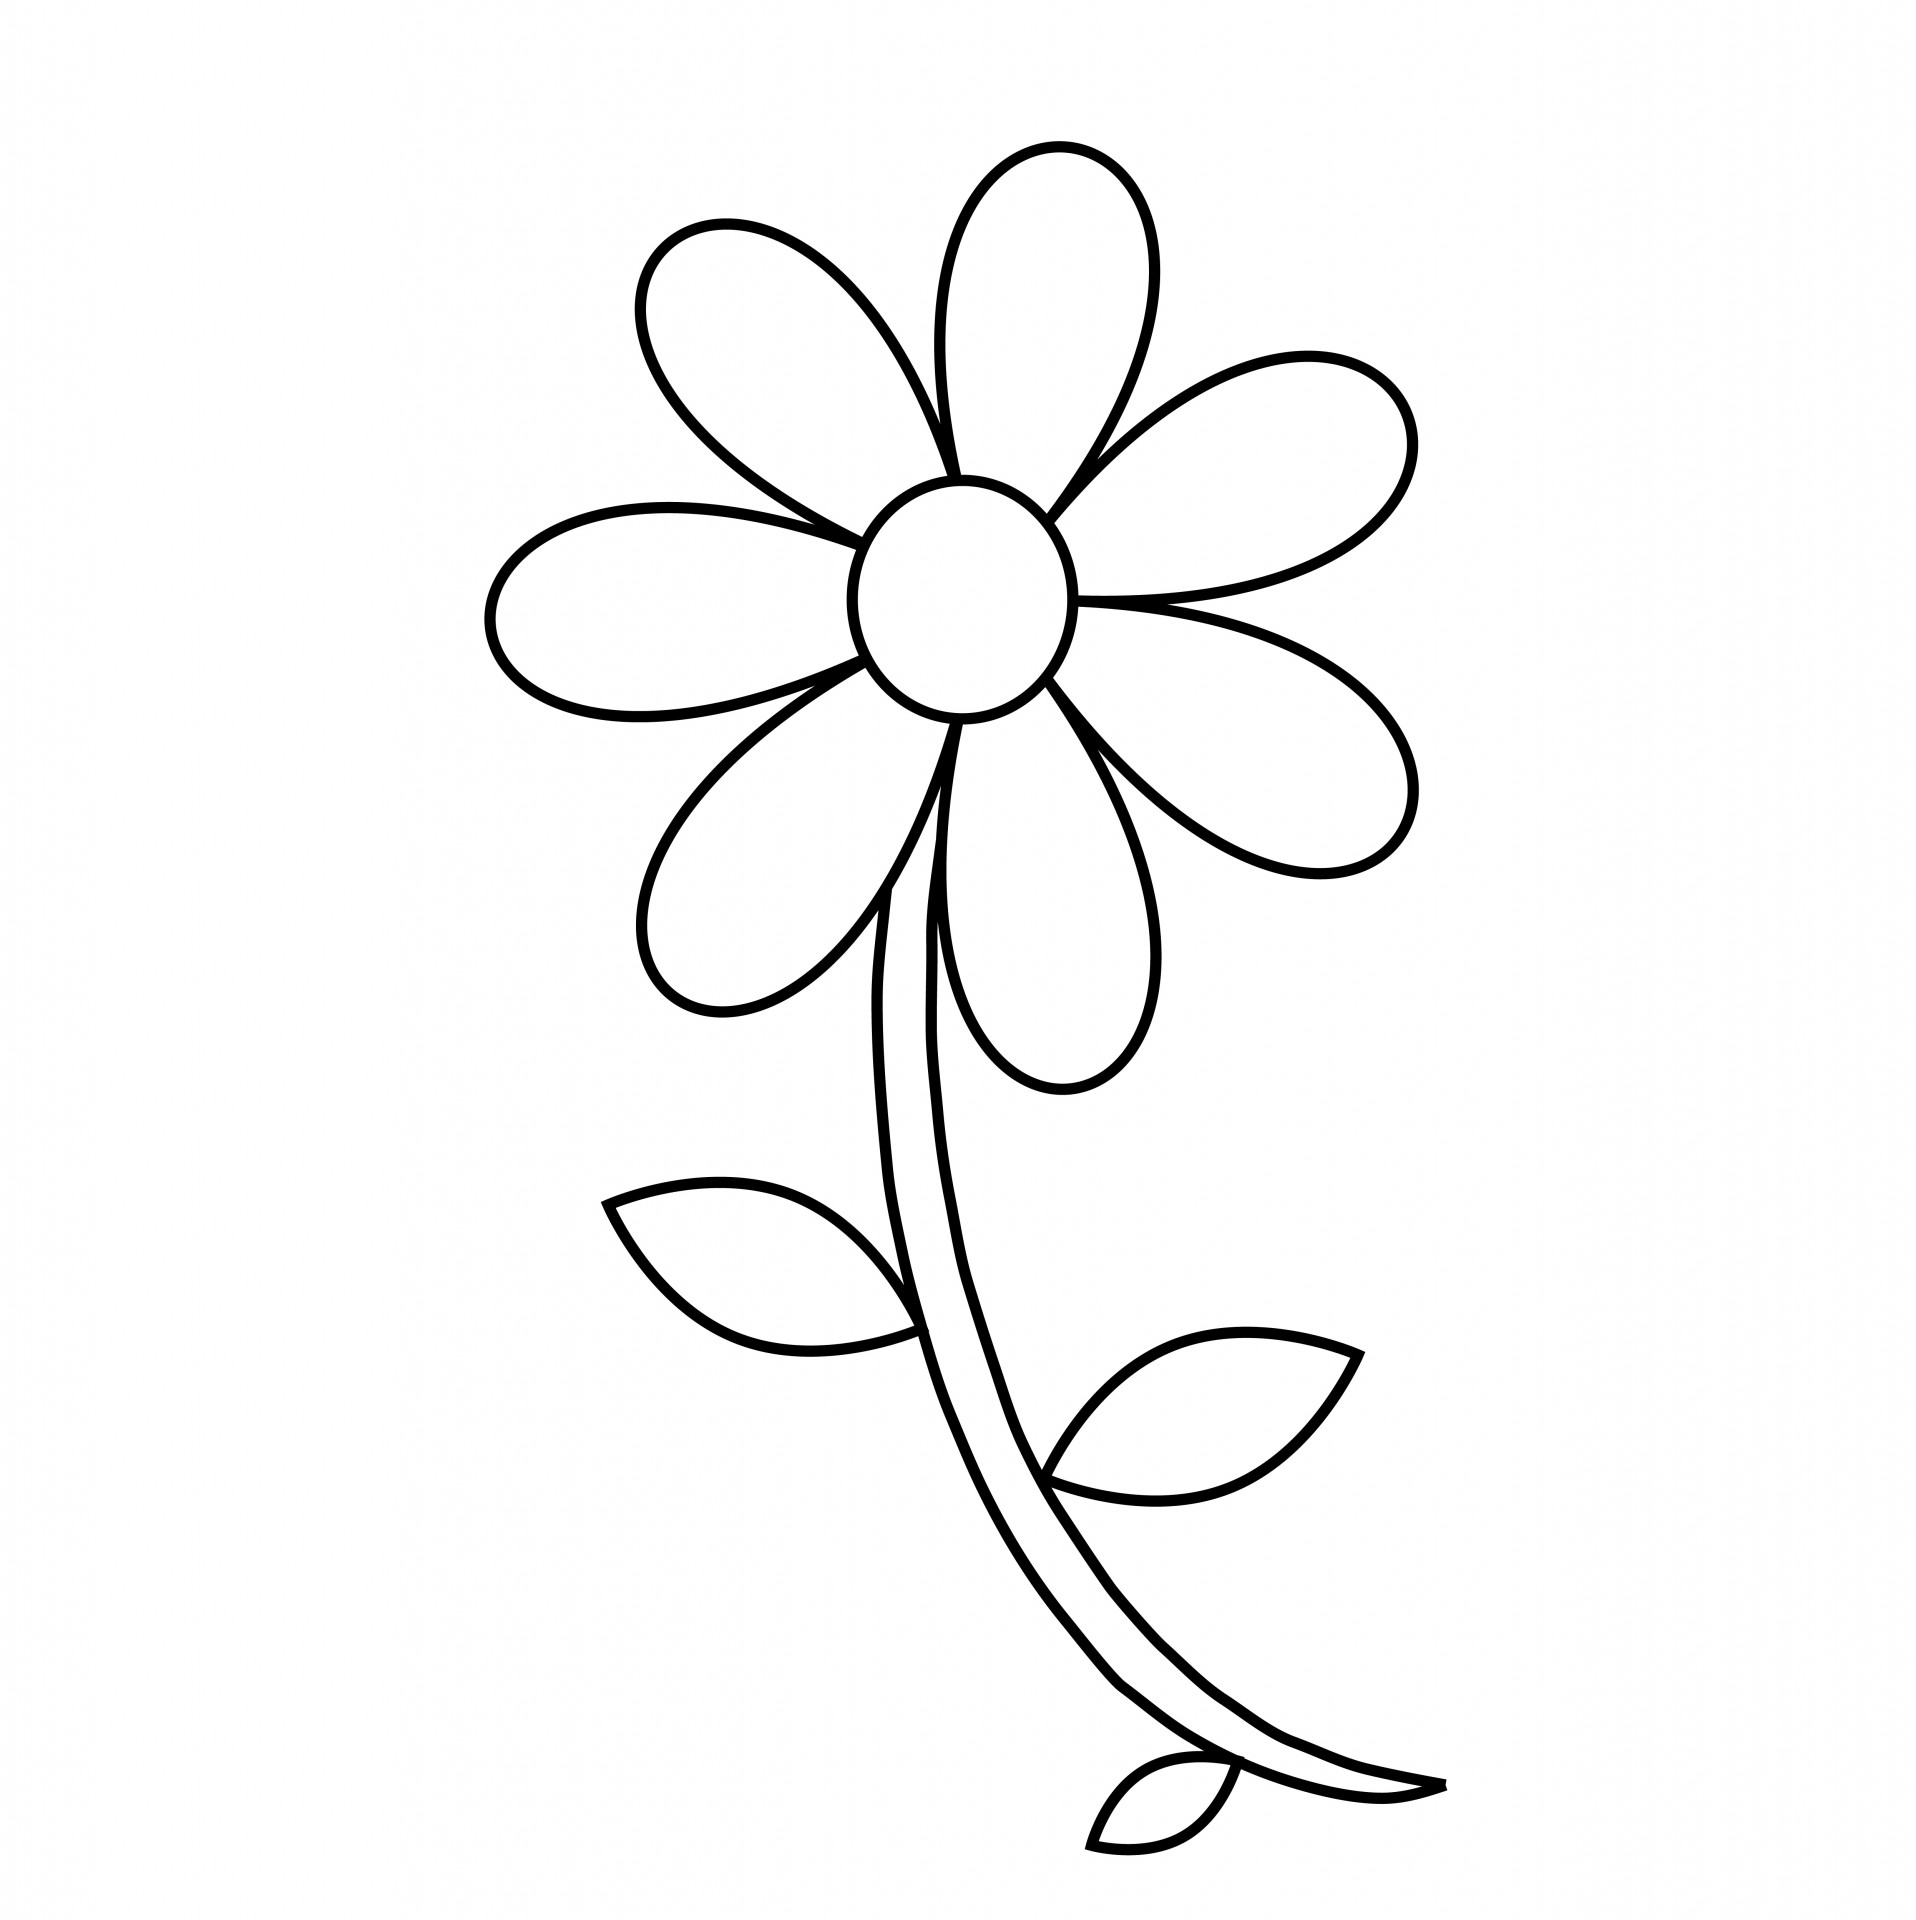 Flower Outline For Kids | Free Download Clip Art | Free Clip Art ...